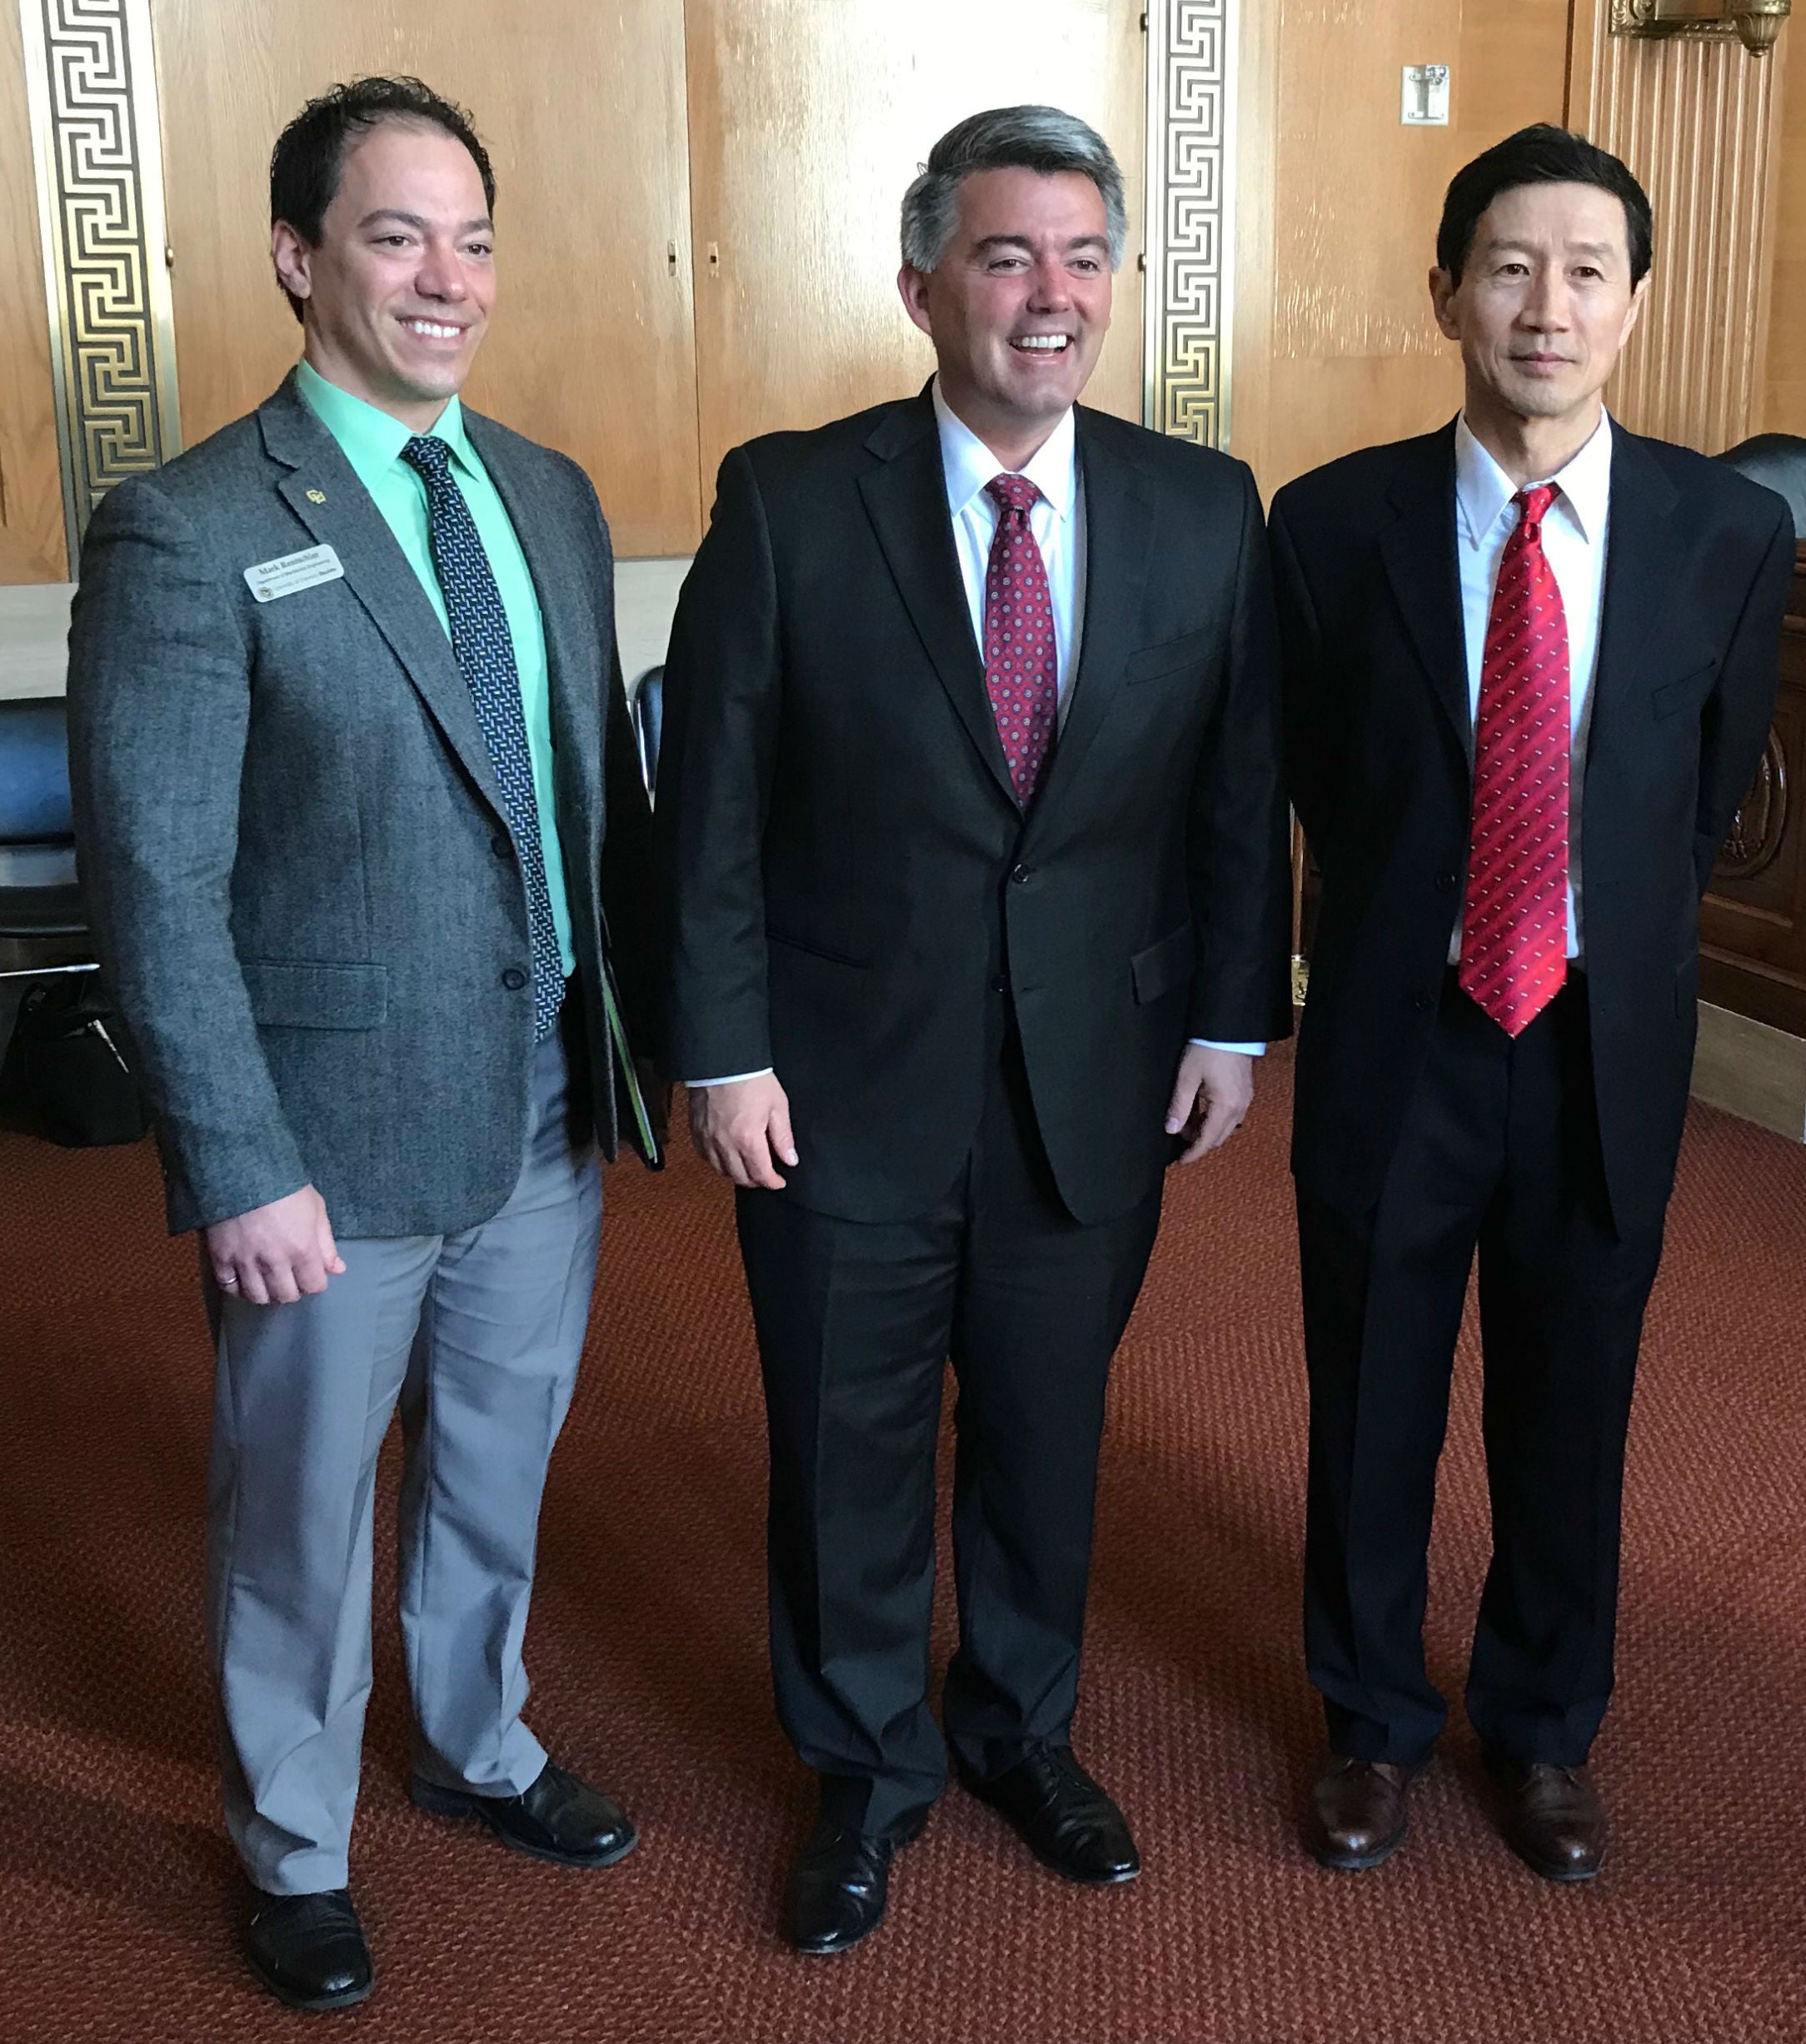 Mark Rentschler, Senator Cory Gardner, and Xinlin Li in Washington, D.C. 